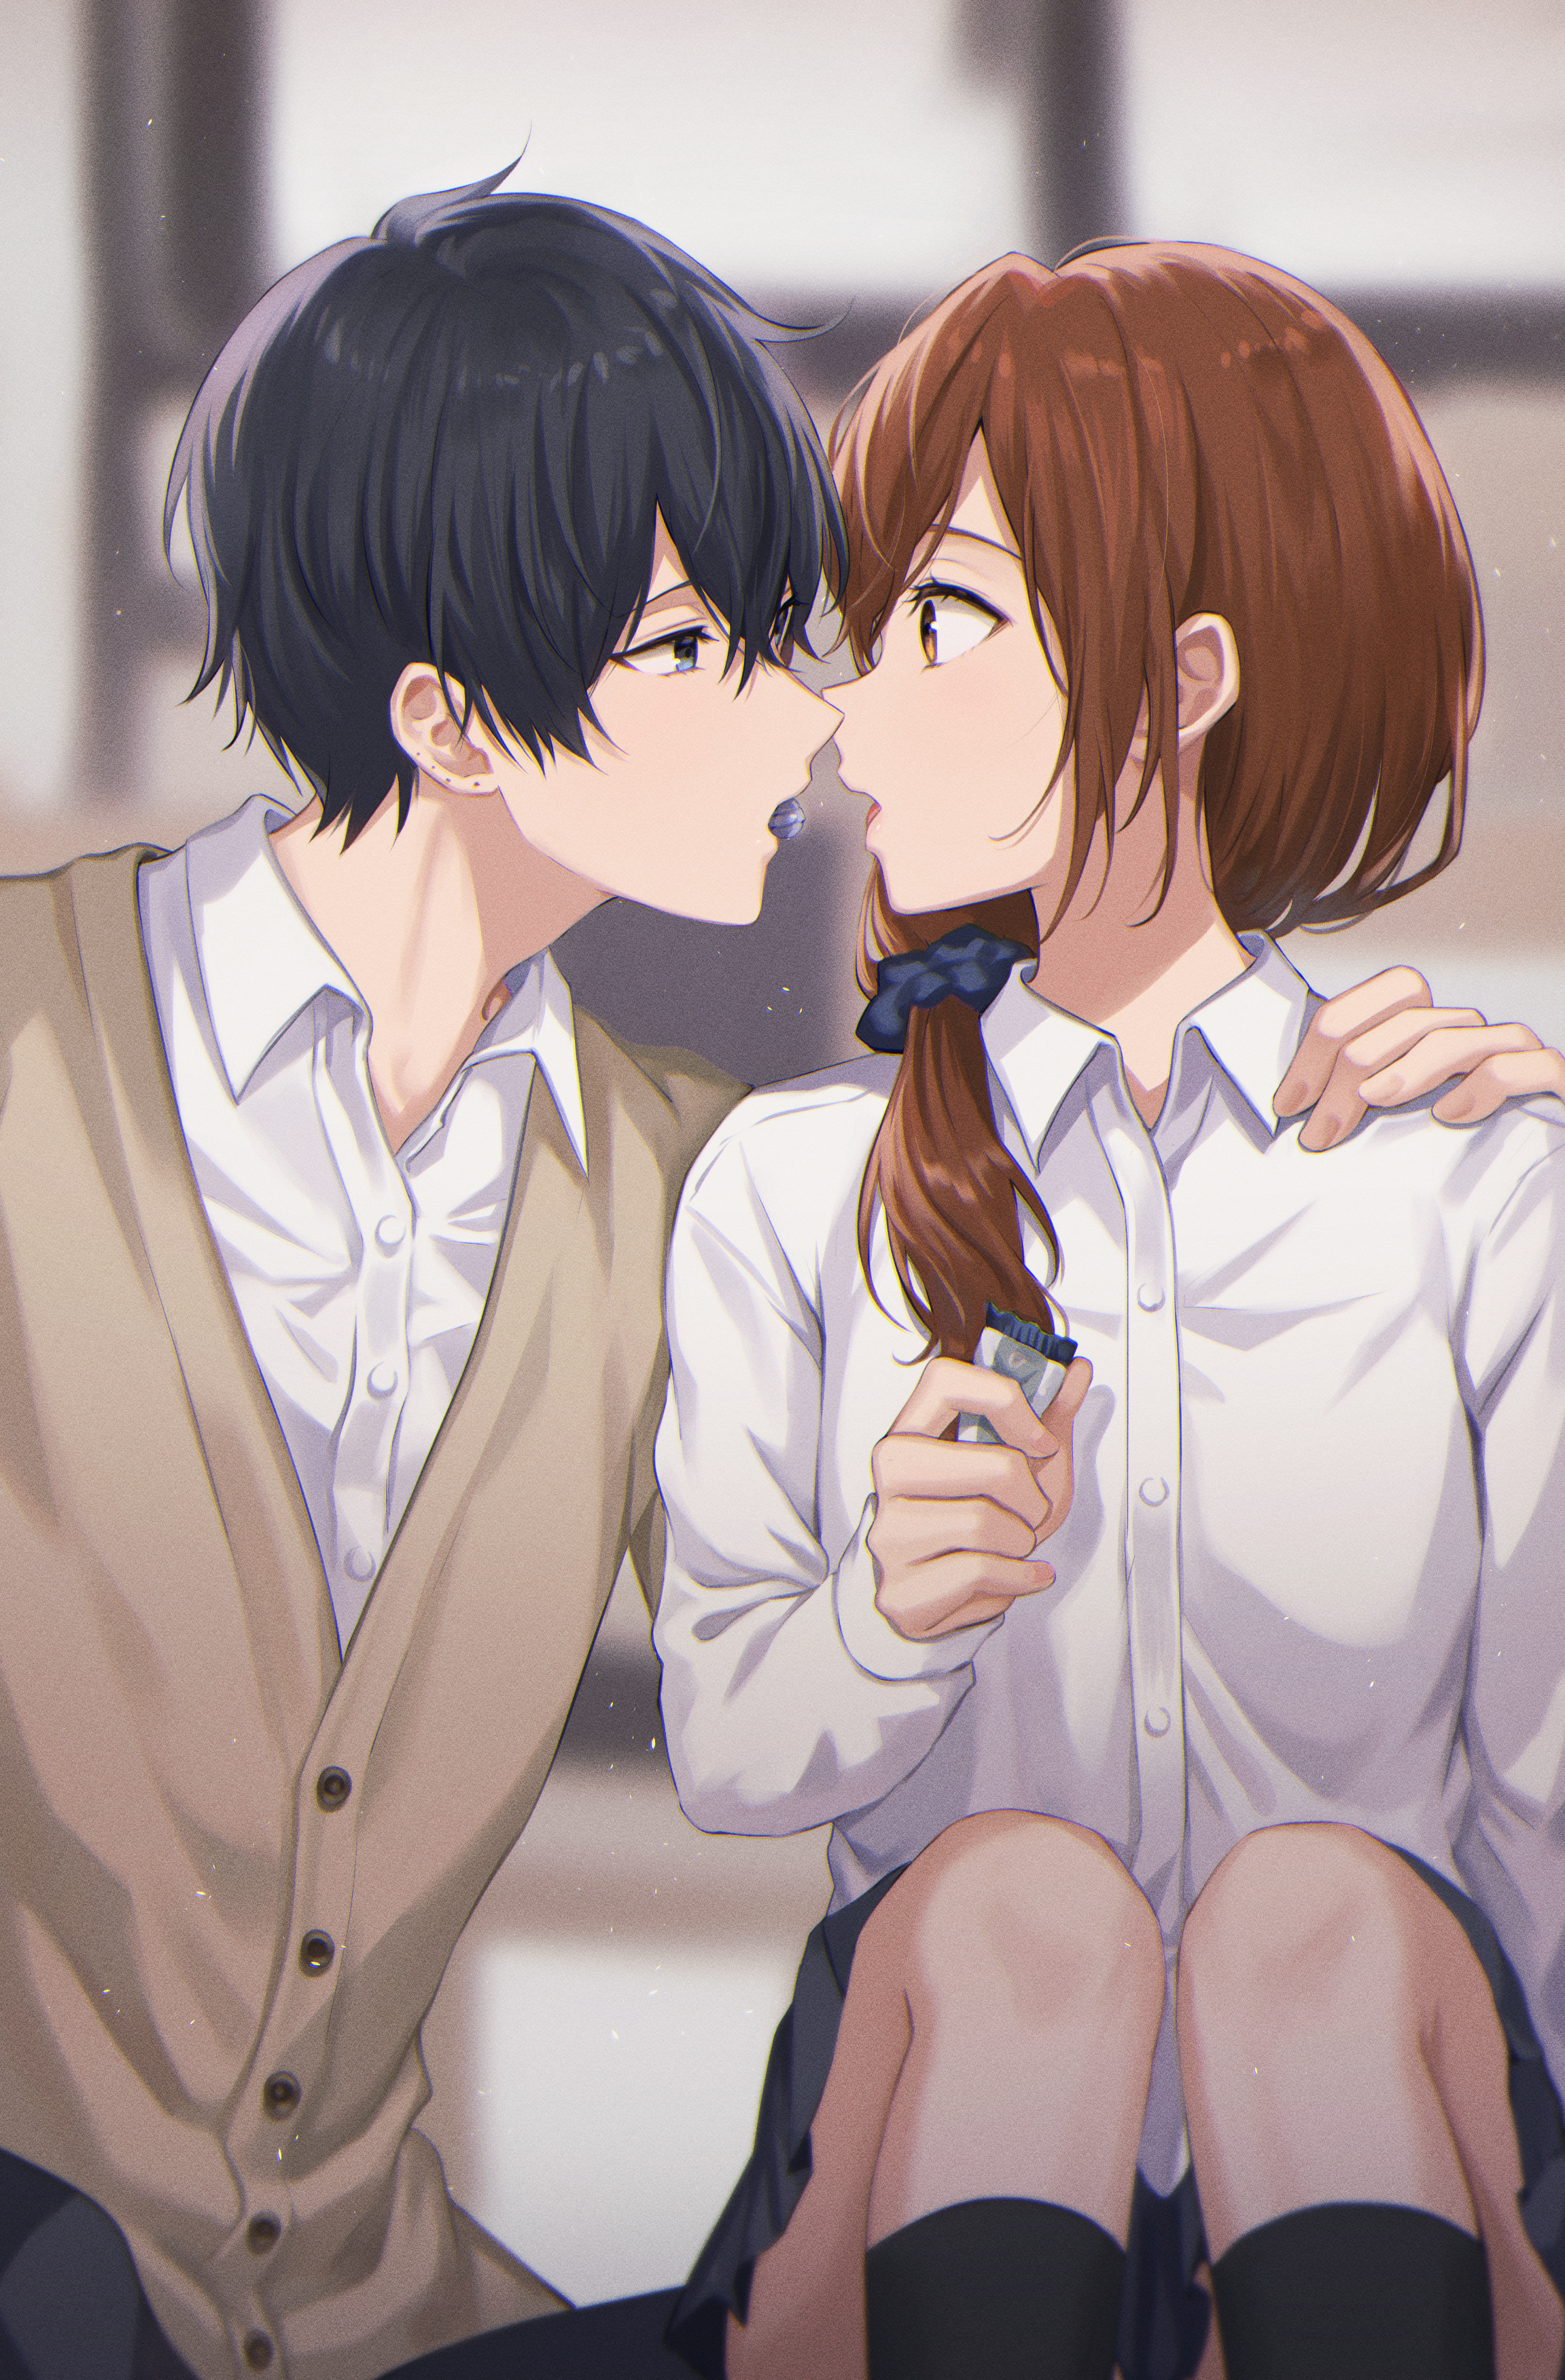 Horimiya Couple School Uniform Bangs JK Anime Boys Anime Girls Kissing Candy Blurry Background Black 2303x3502